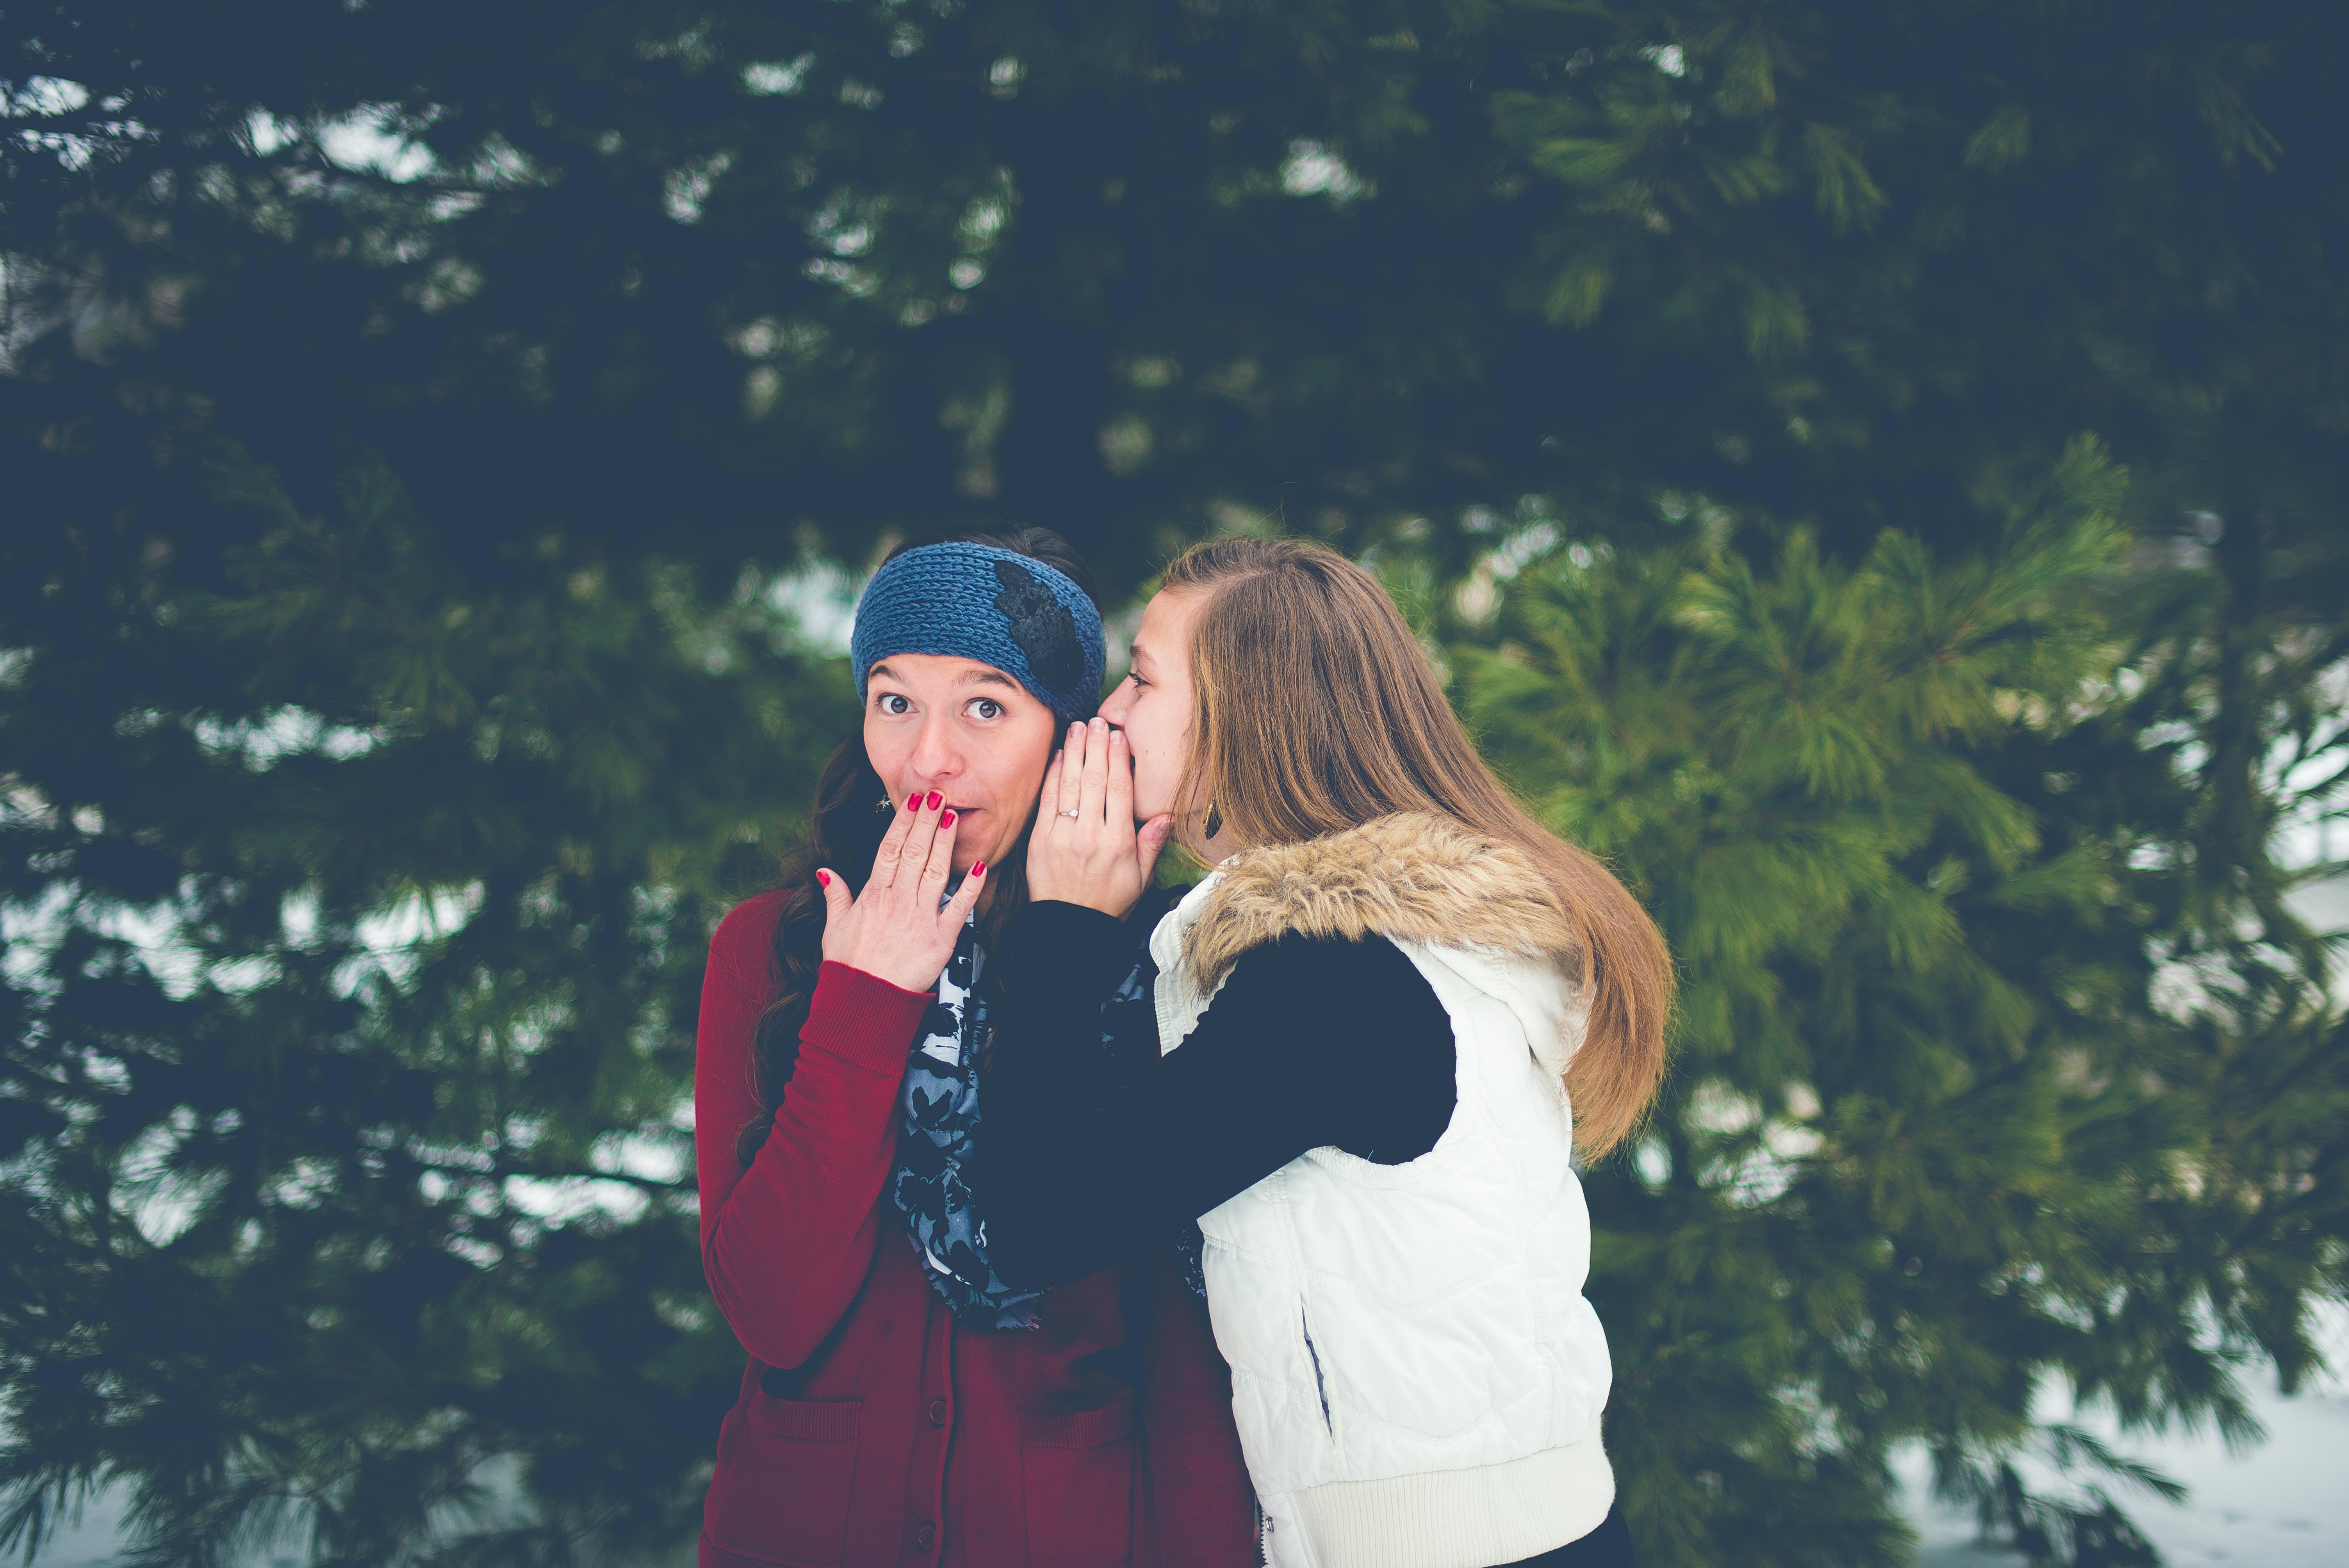 Girls sharing secrets